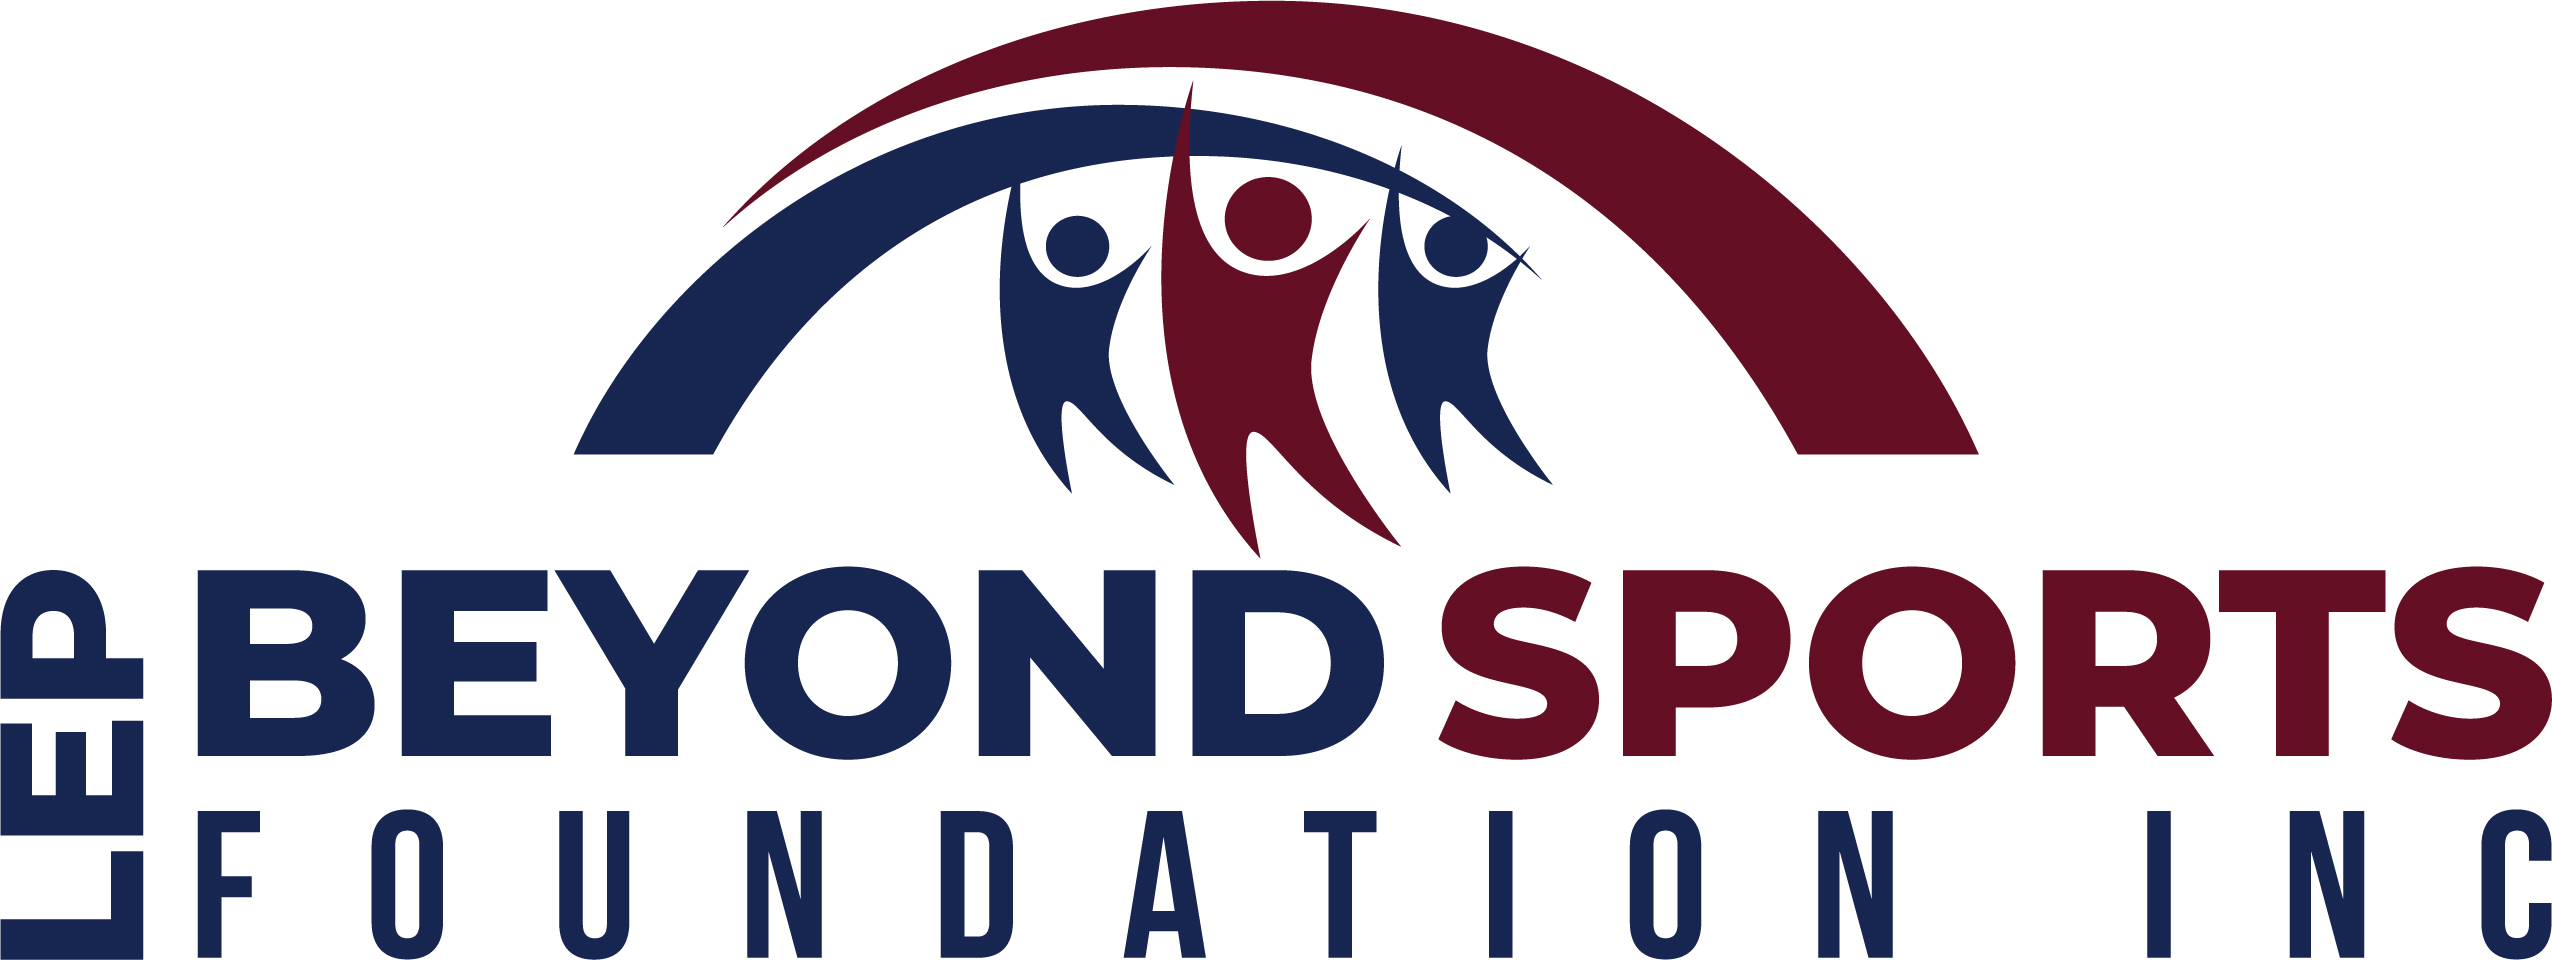 LEP Beyond Sports Foundation, Inc. logo